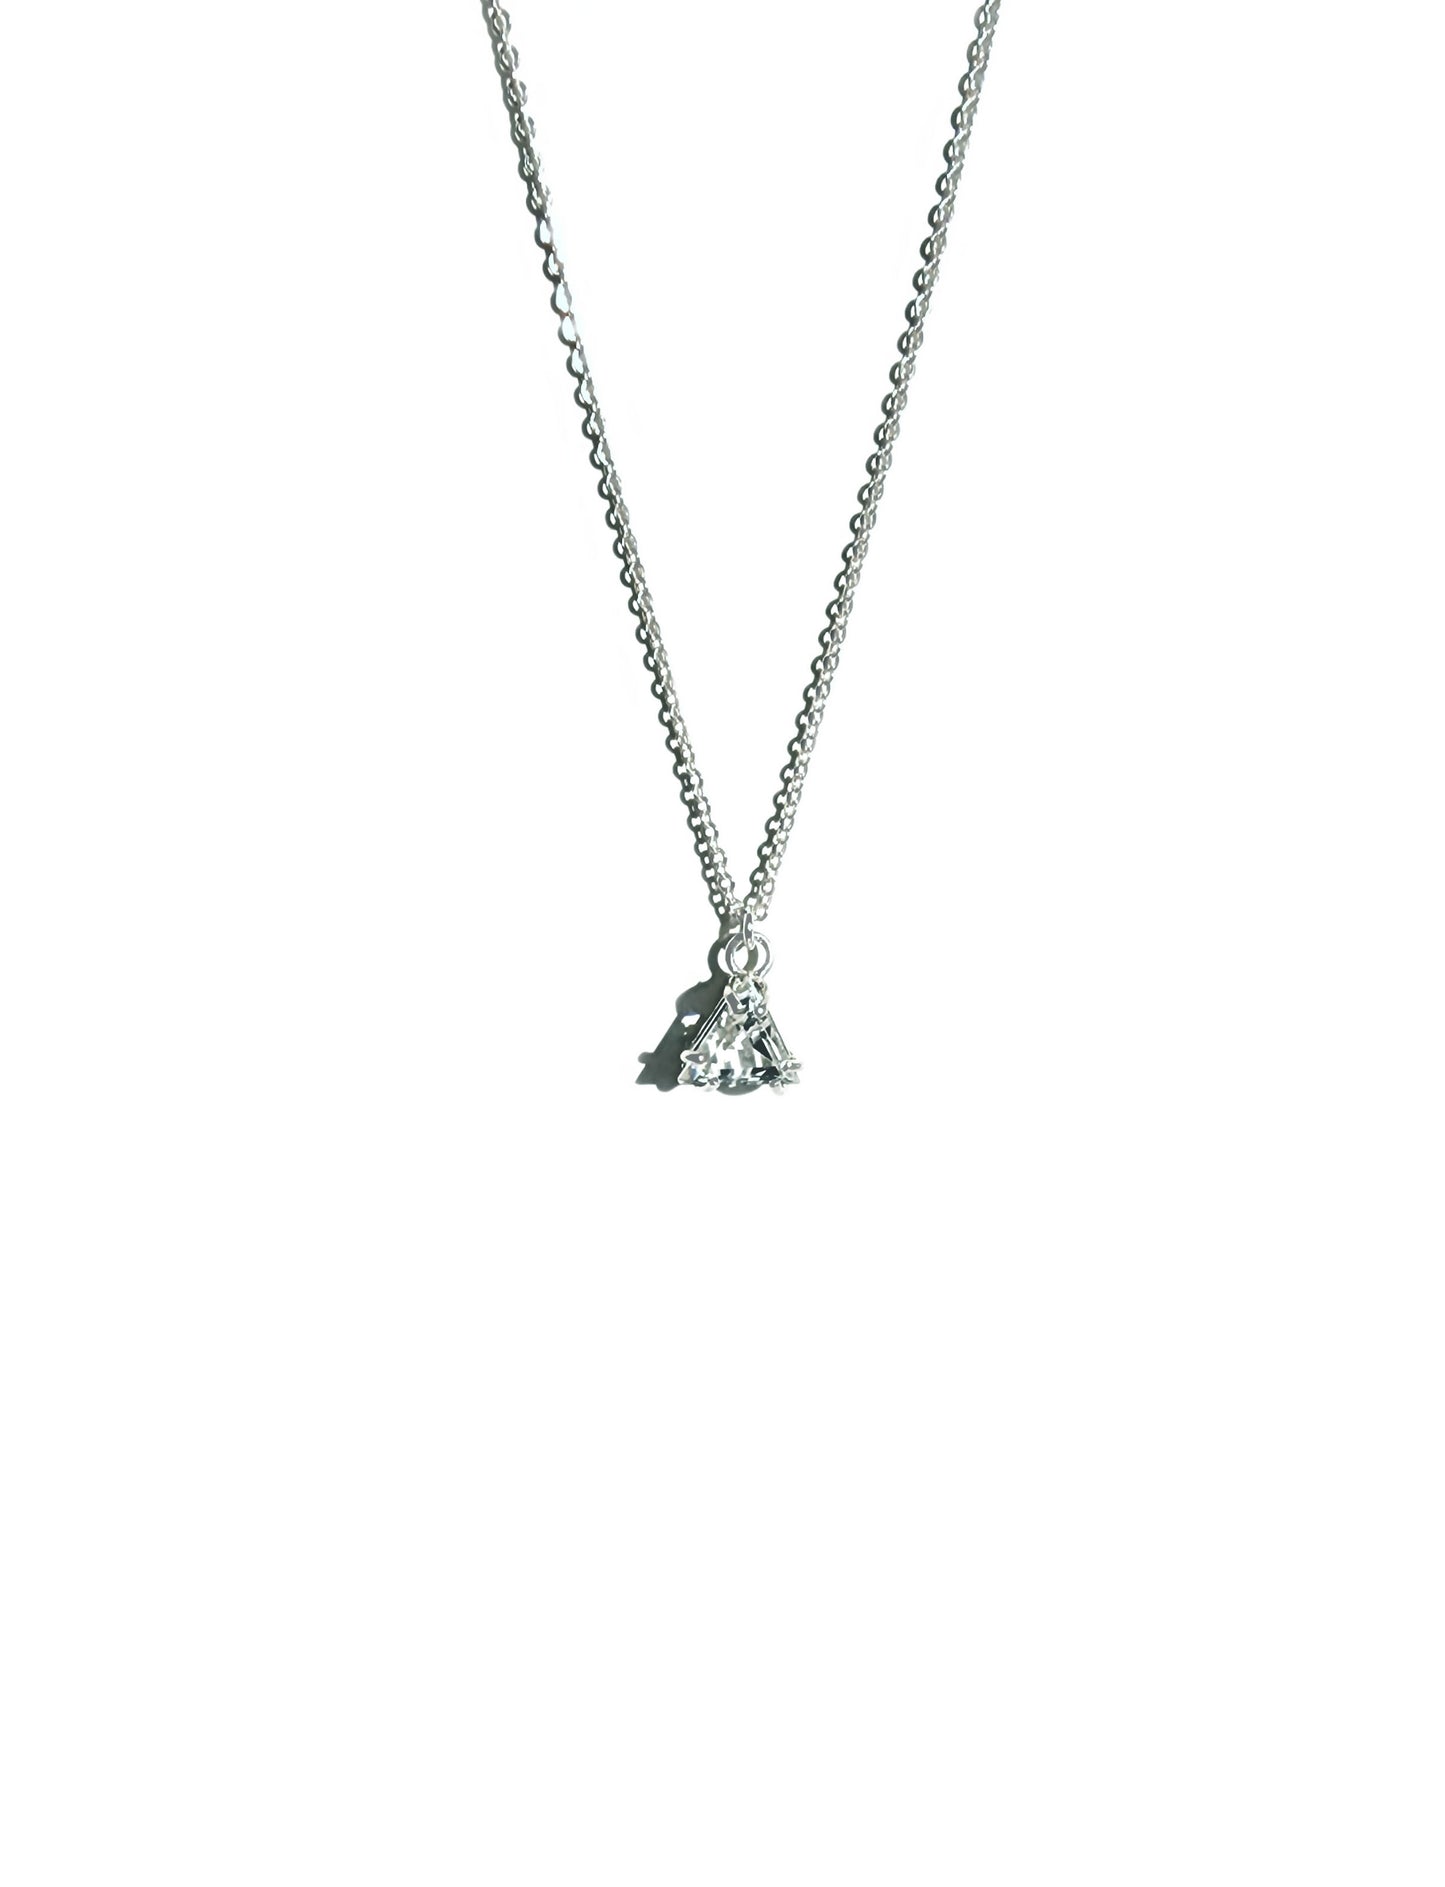 Faceted Triangle Cut Quartz Necklace